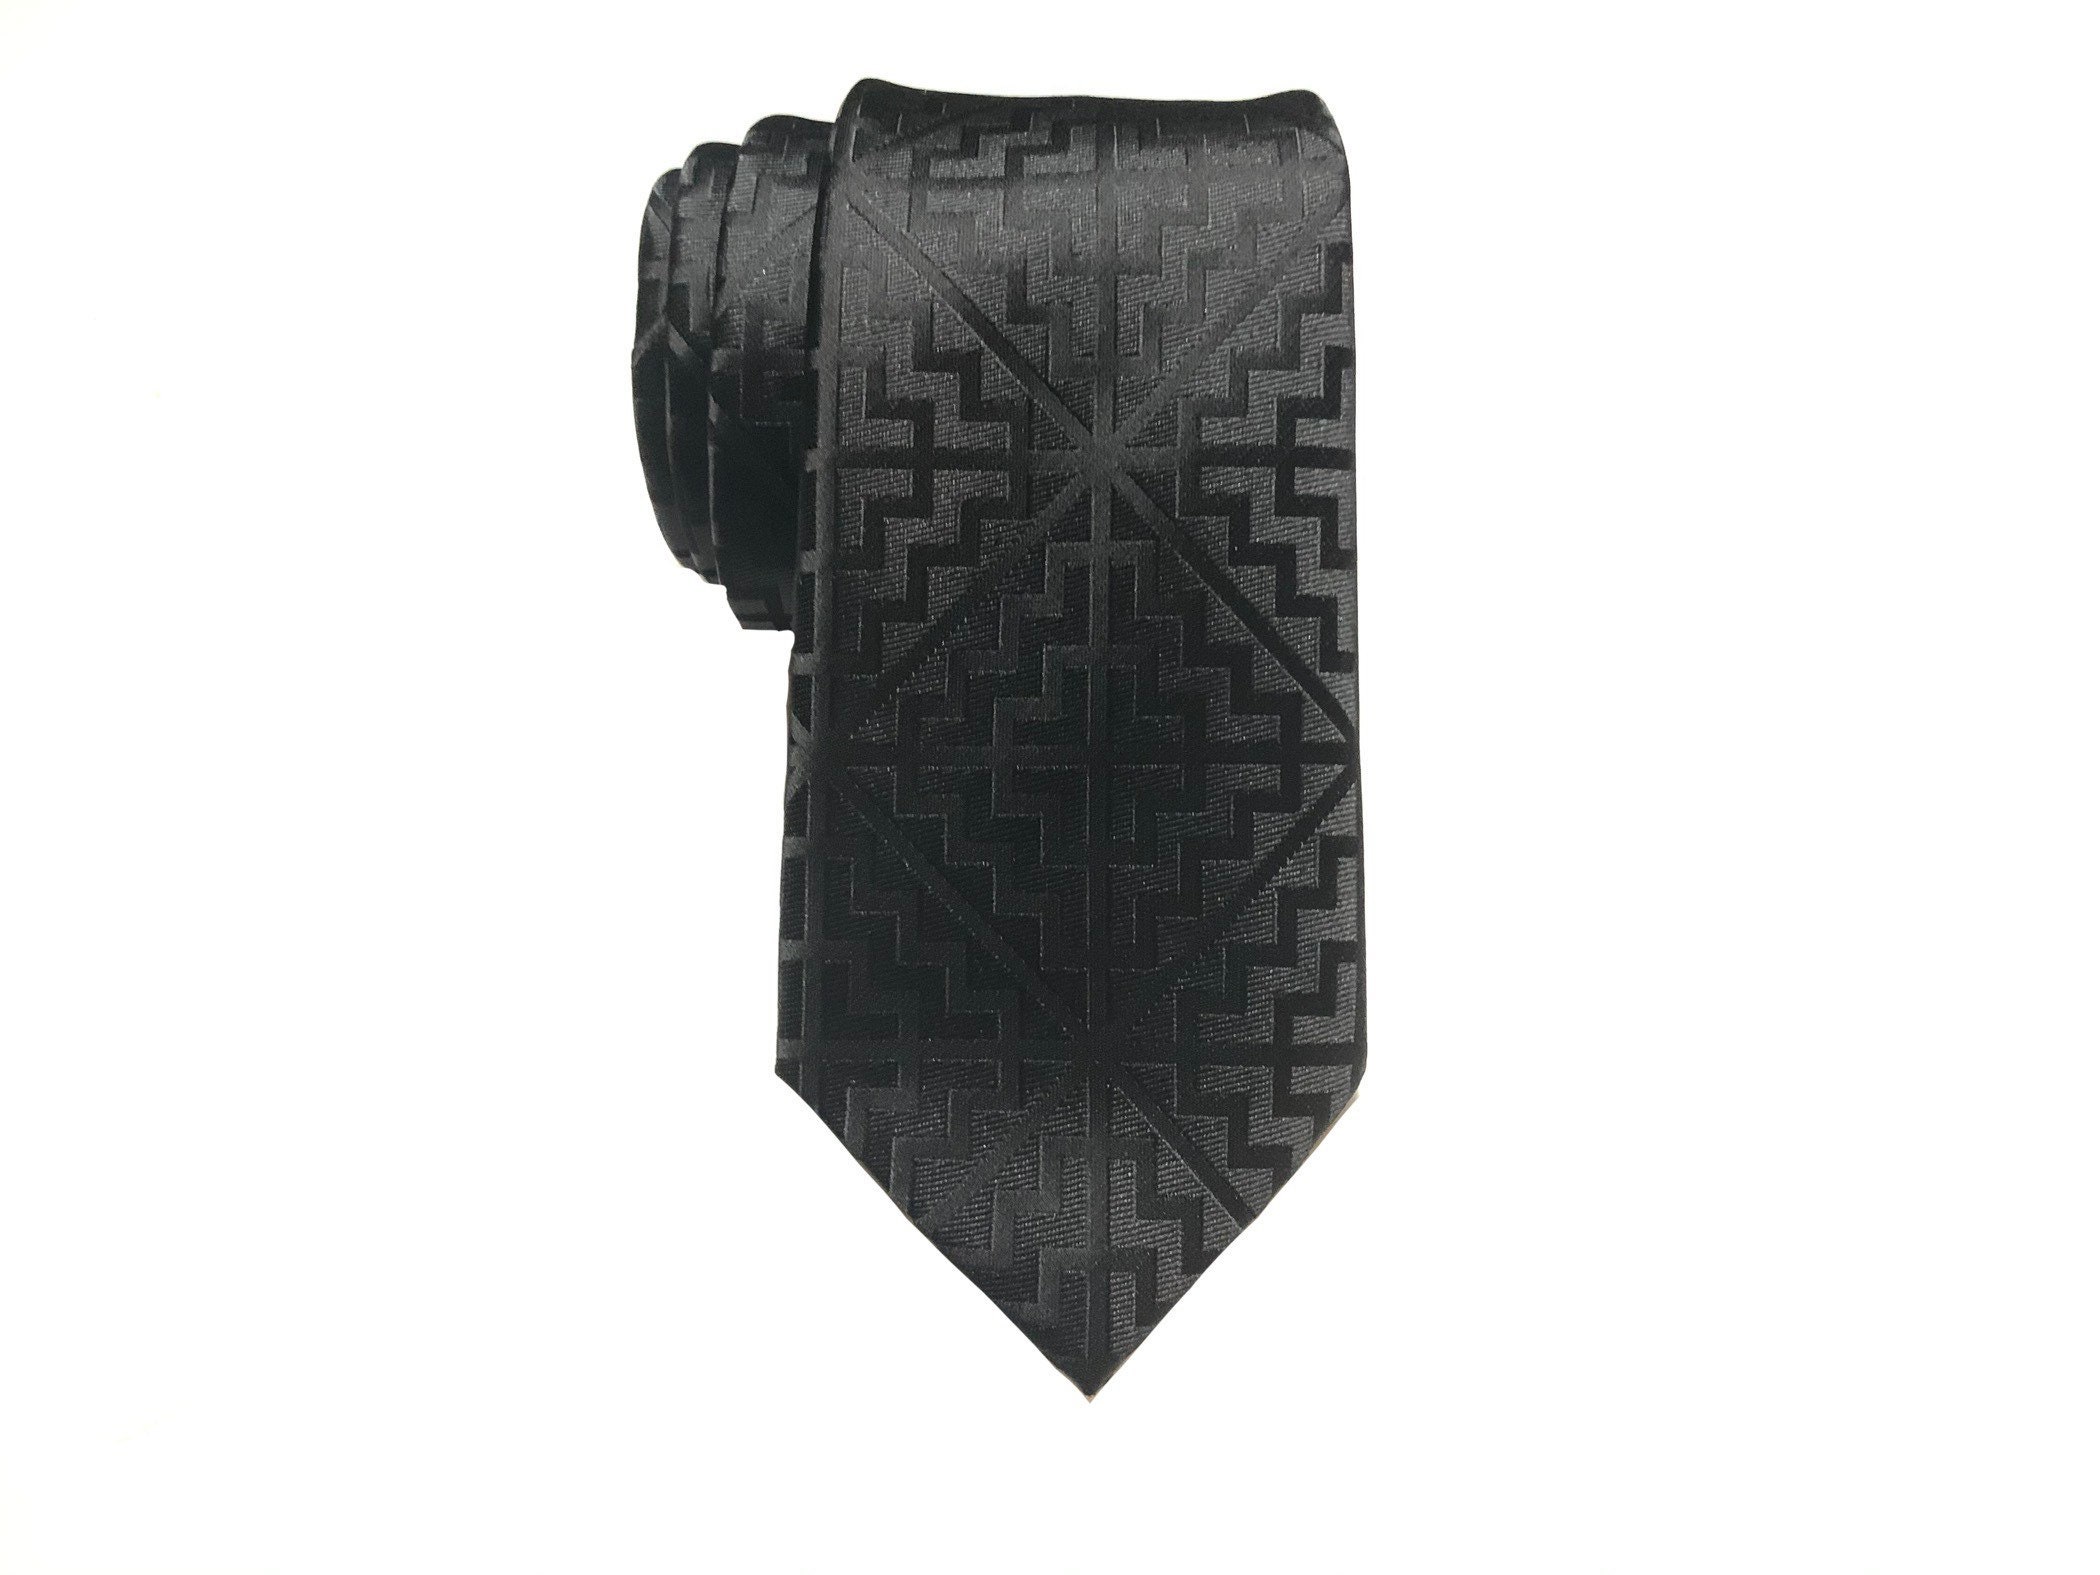 Hmong Tie John black tie Hmong House symbol Strength | Etsy